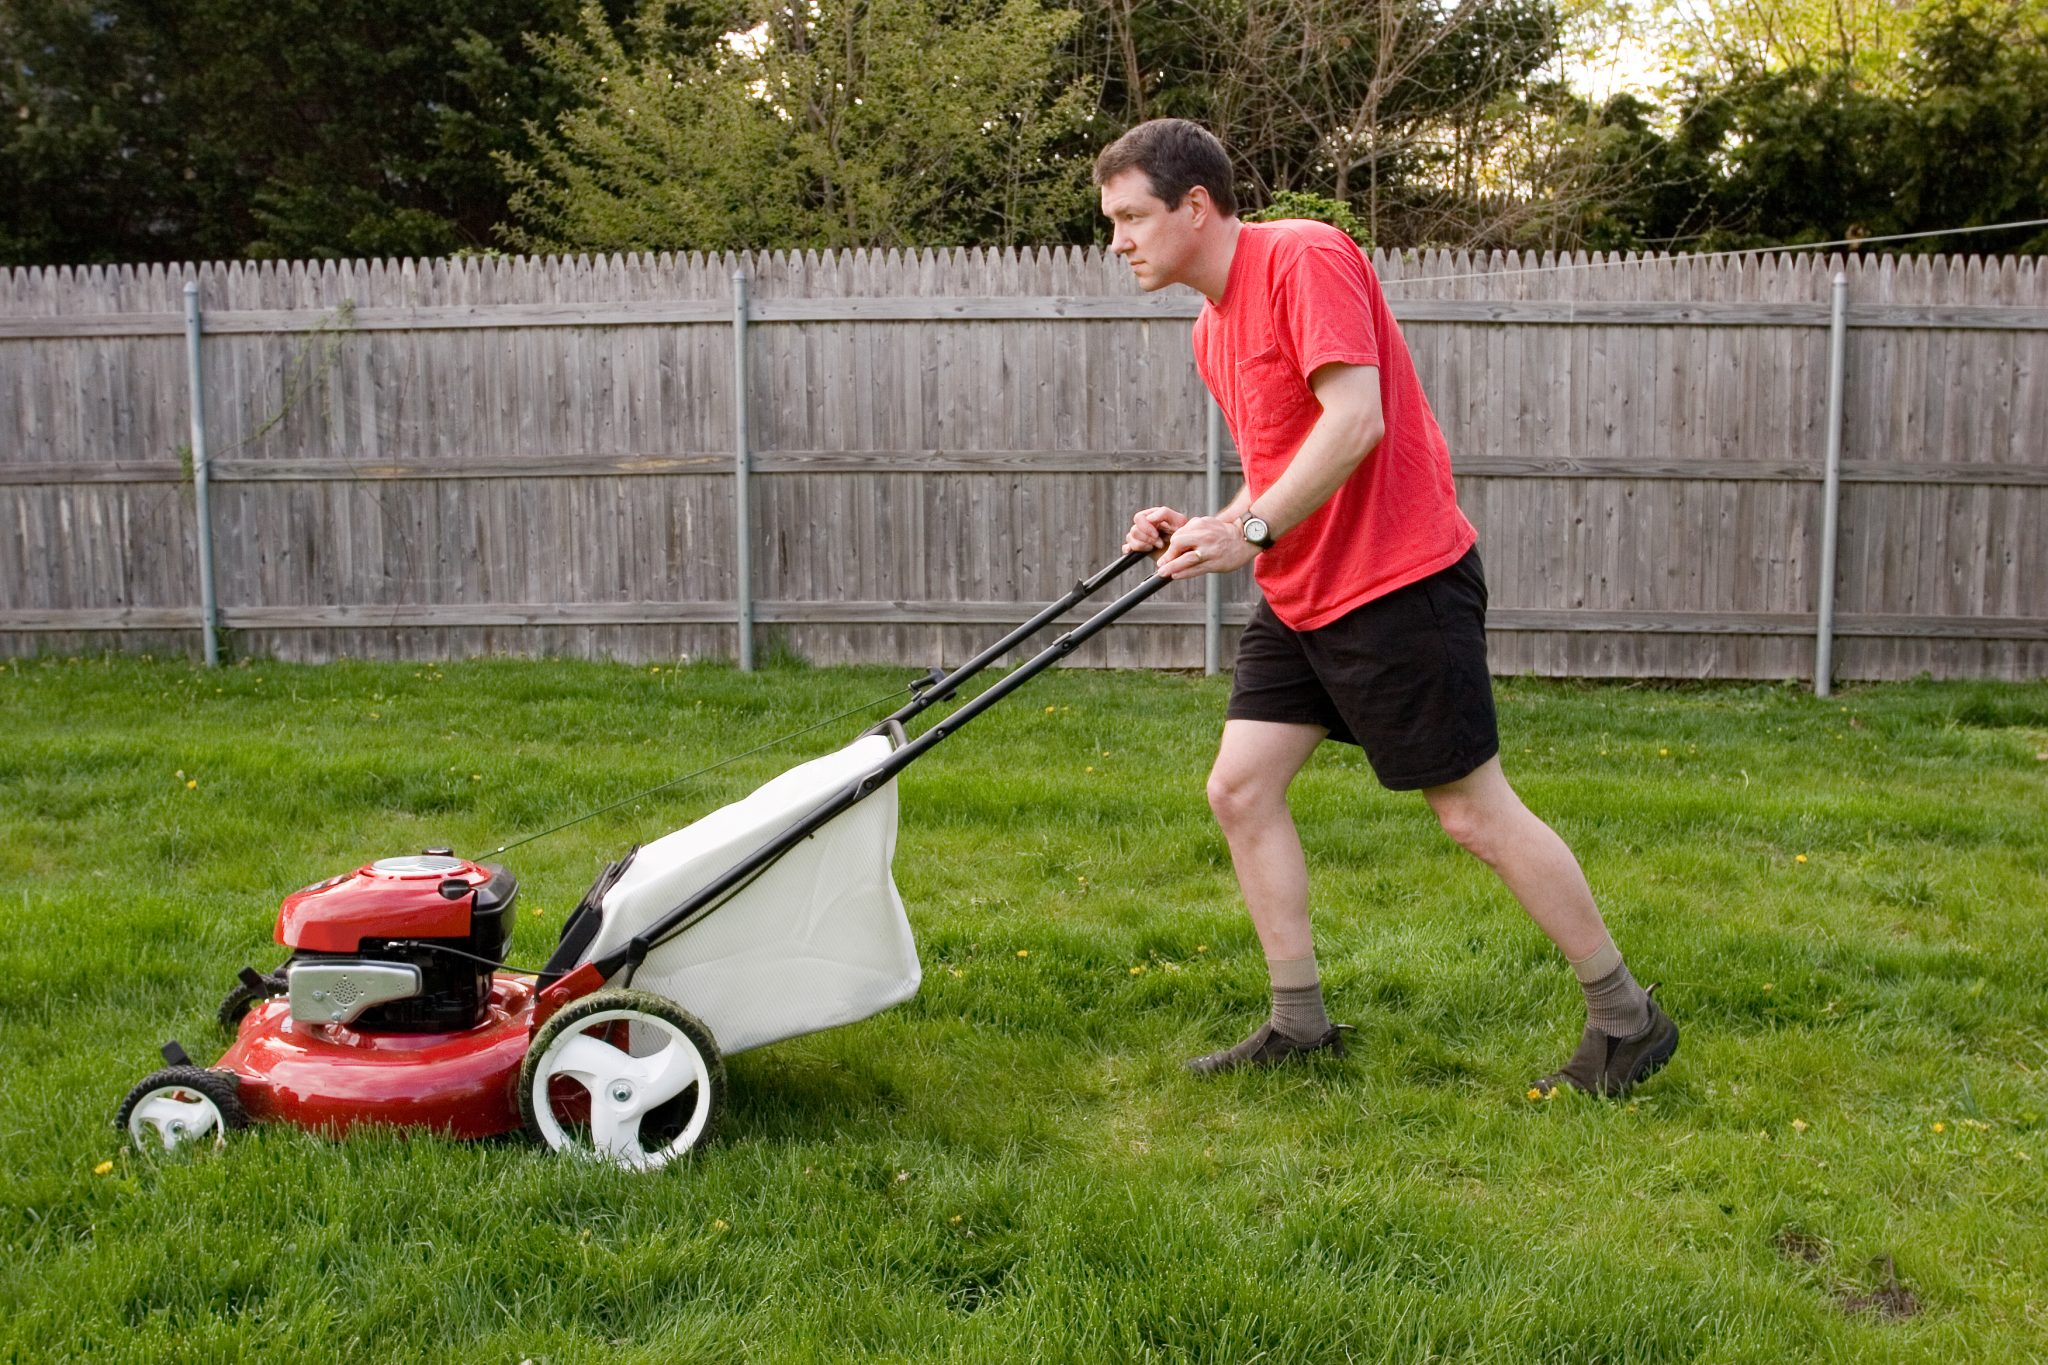 Mow the lawn. Стрижка газона. Lawn Mower man ADDCHILD. Mow the Lawn a pic.